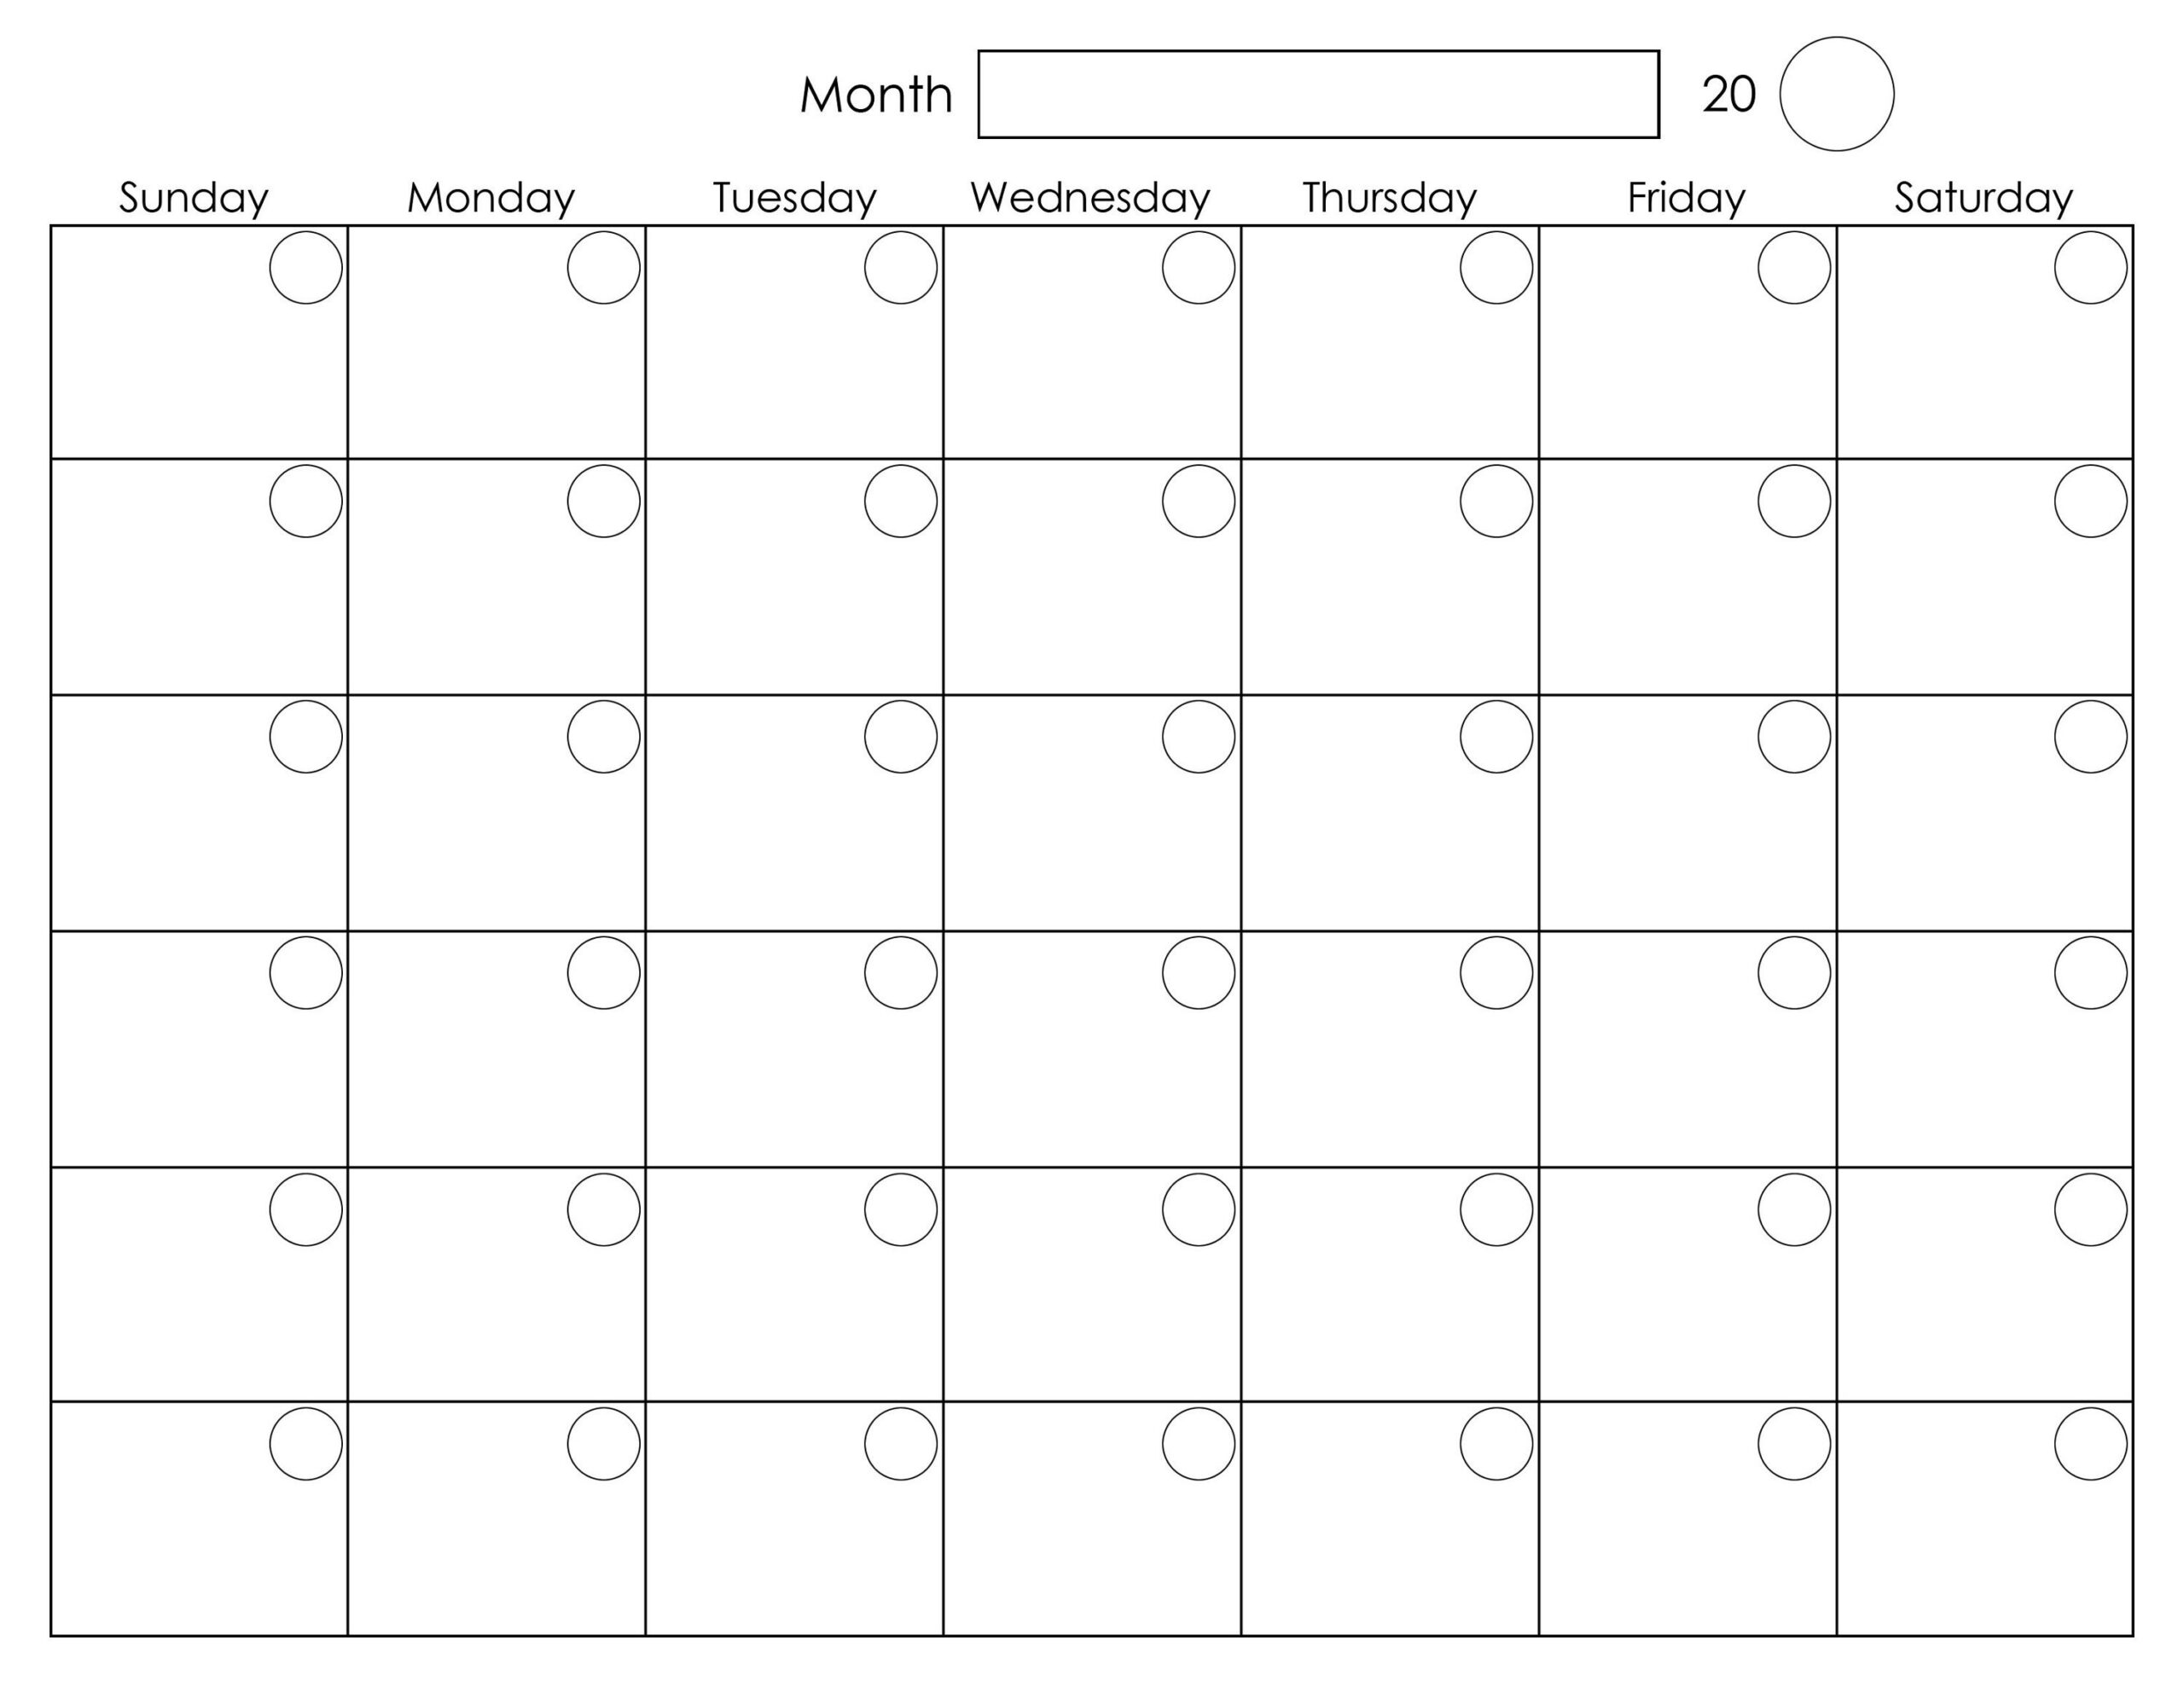 Blank Monthly Calender | Calendar For Planning